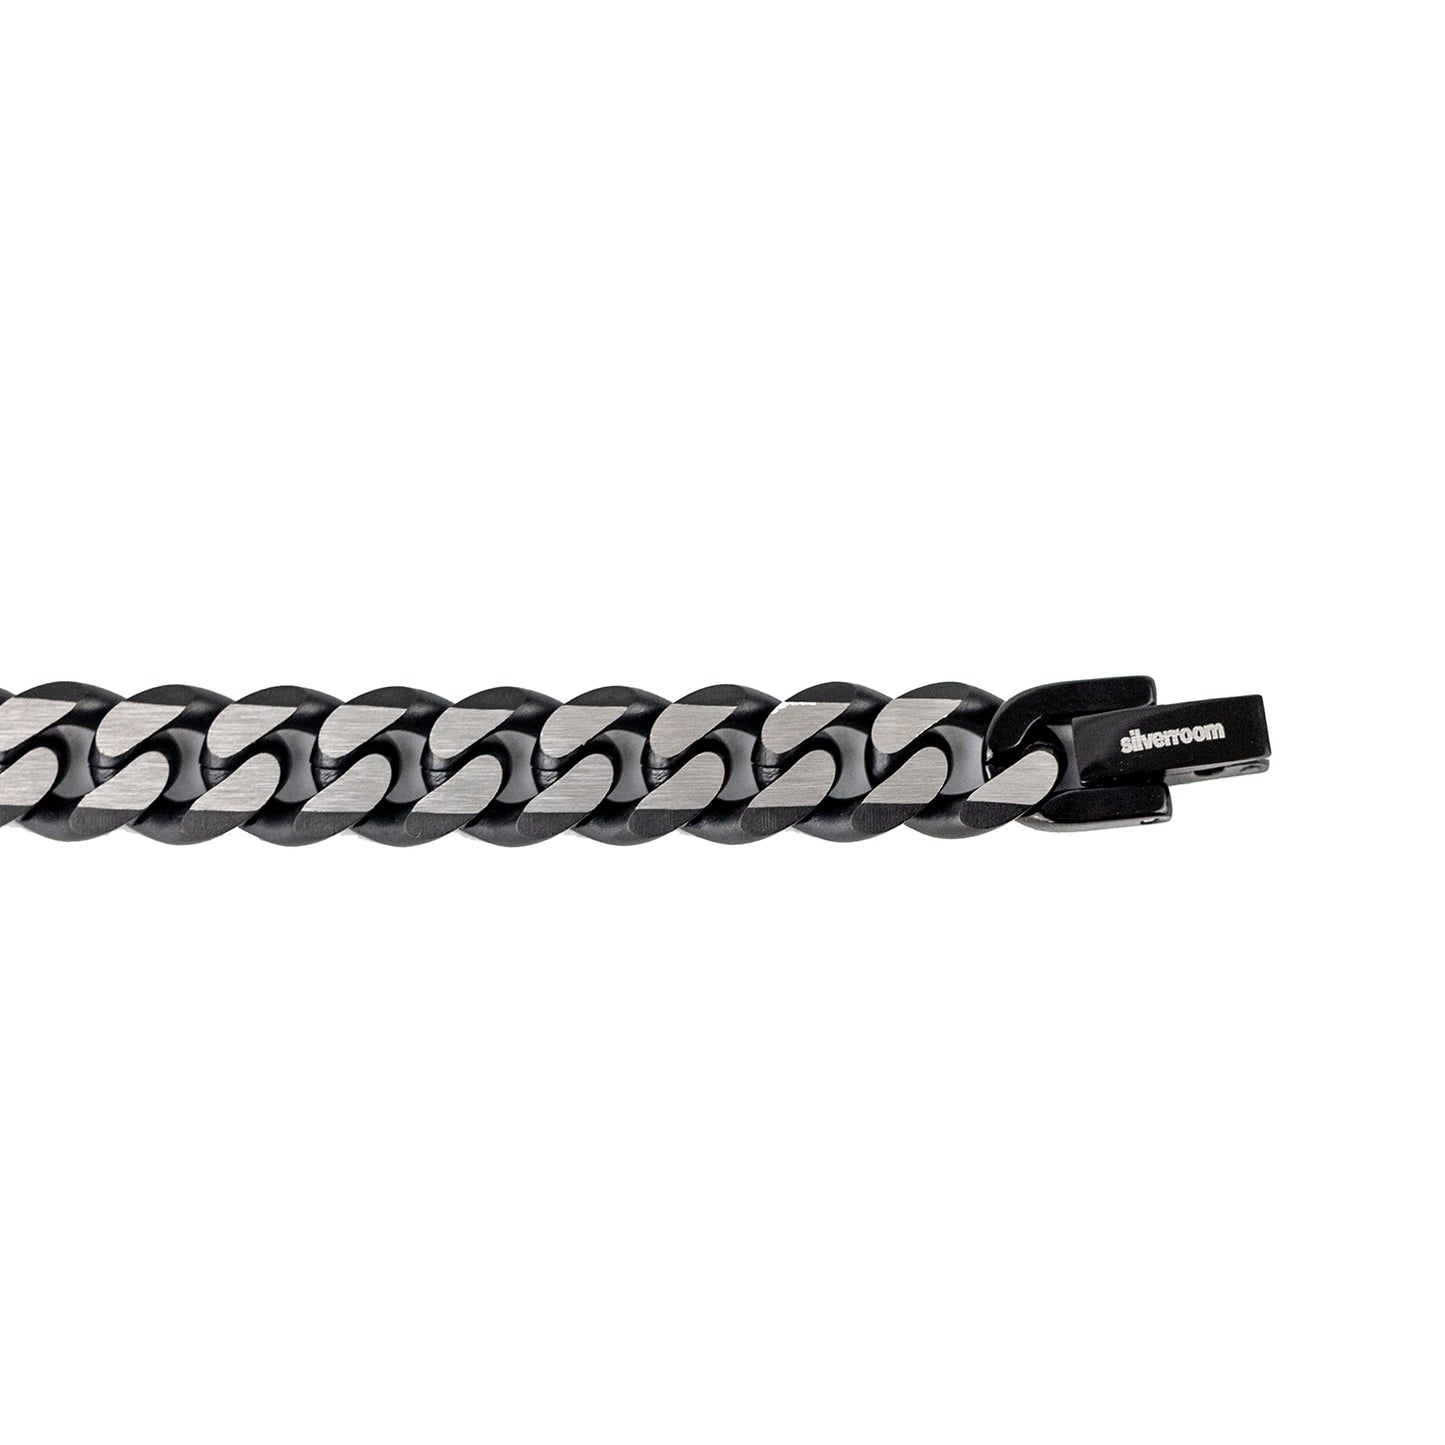 Stainless Steel Bracelet w/ 2 Extension Links